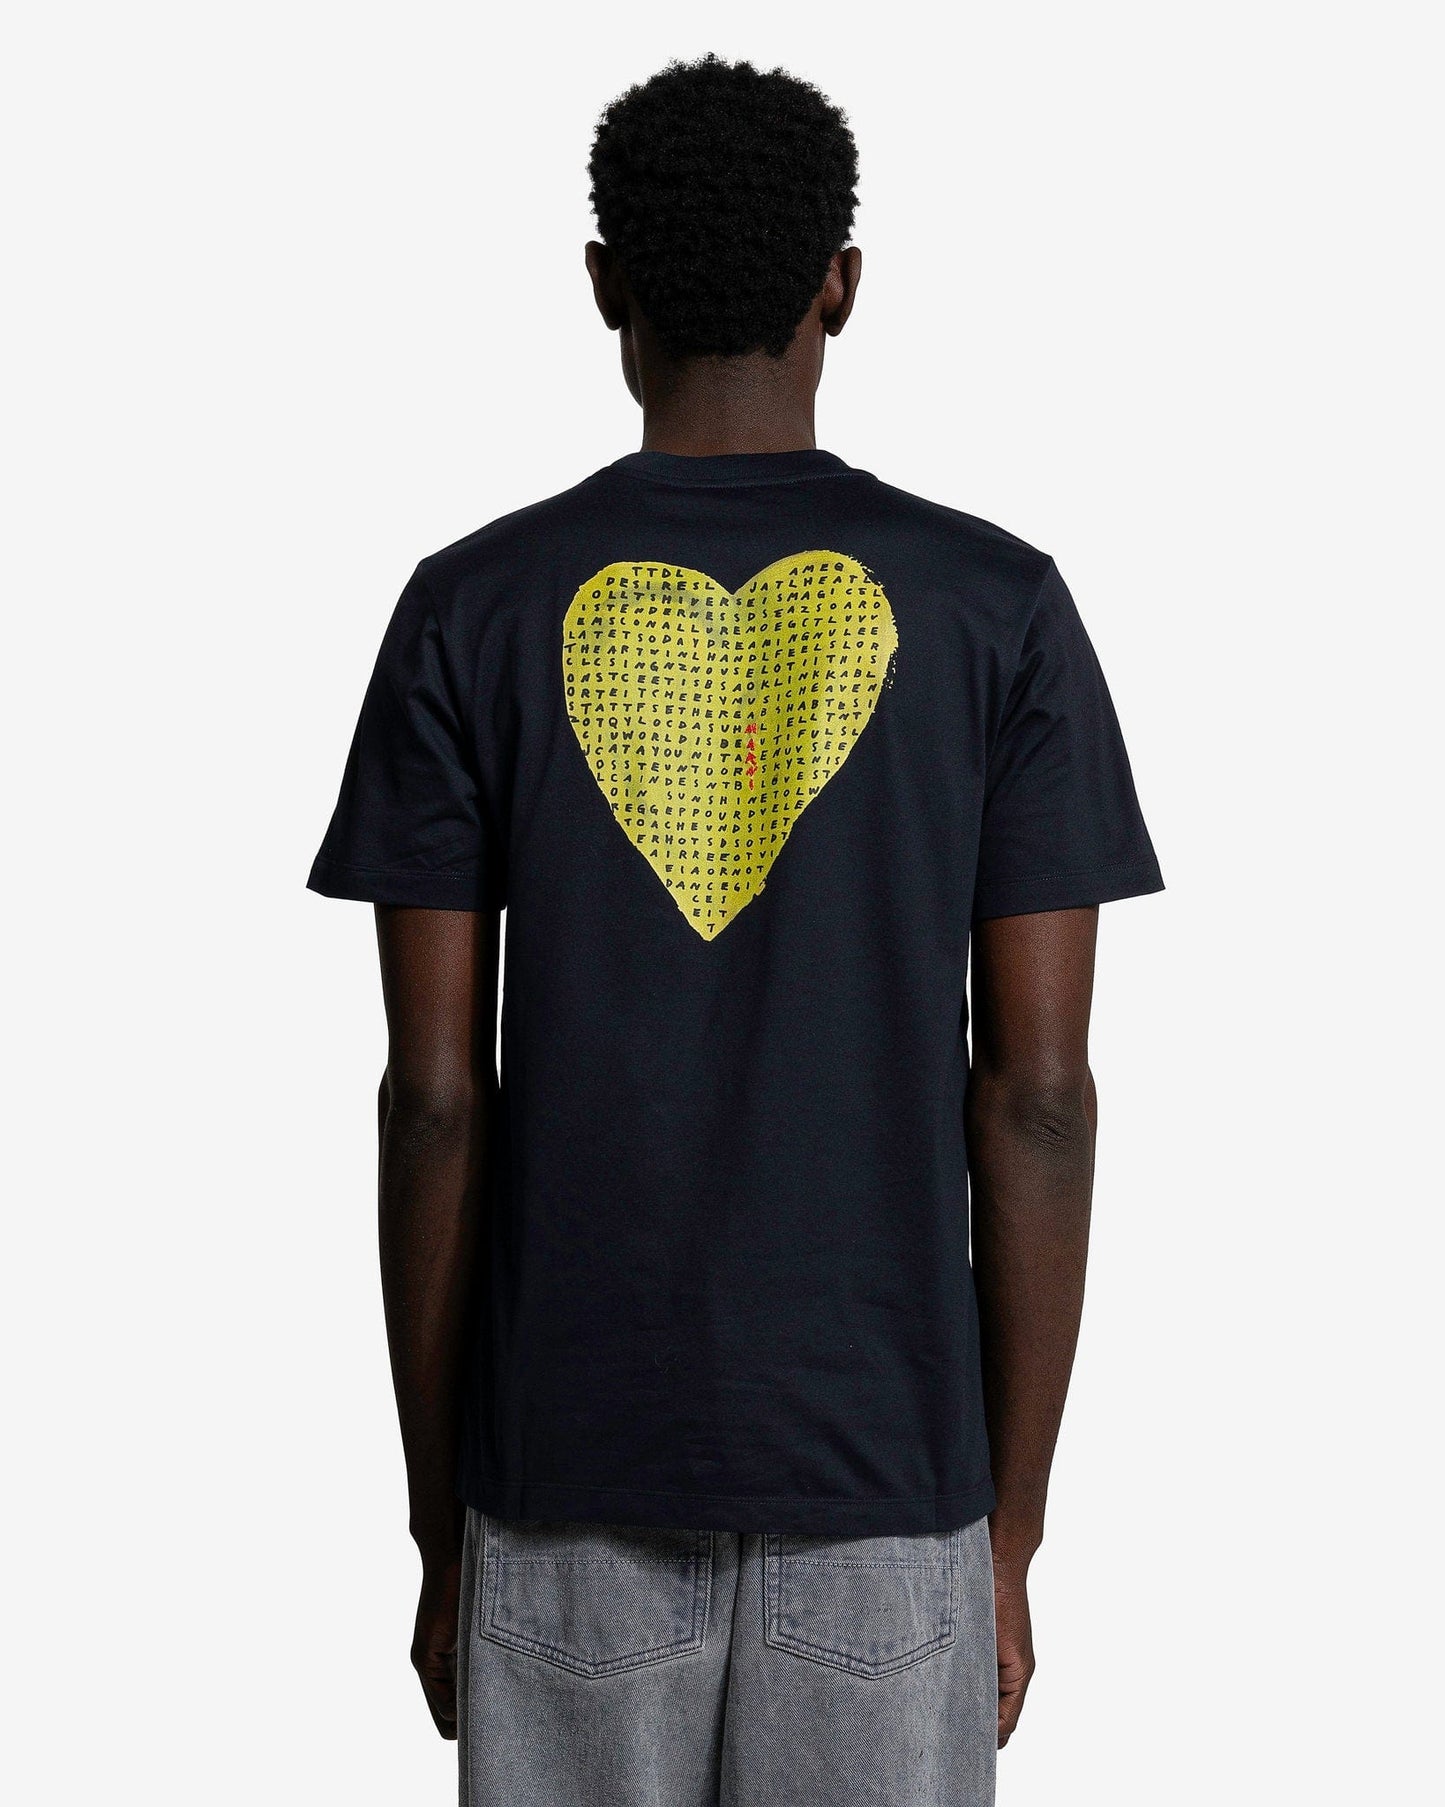 Marni Men's T-Shirt Crossword Heart T-Shirt in Blue/Black